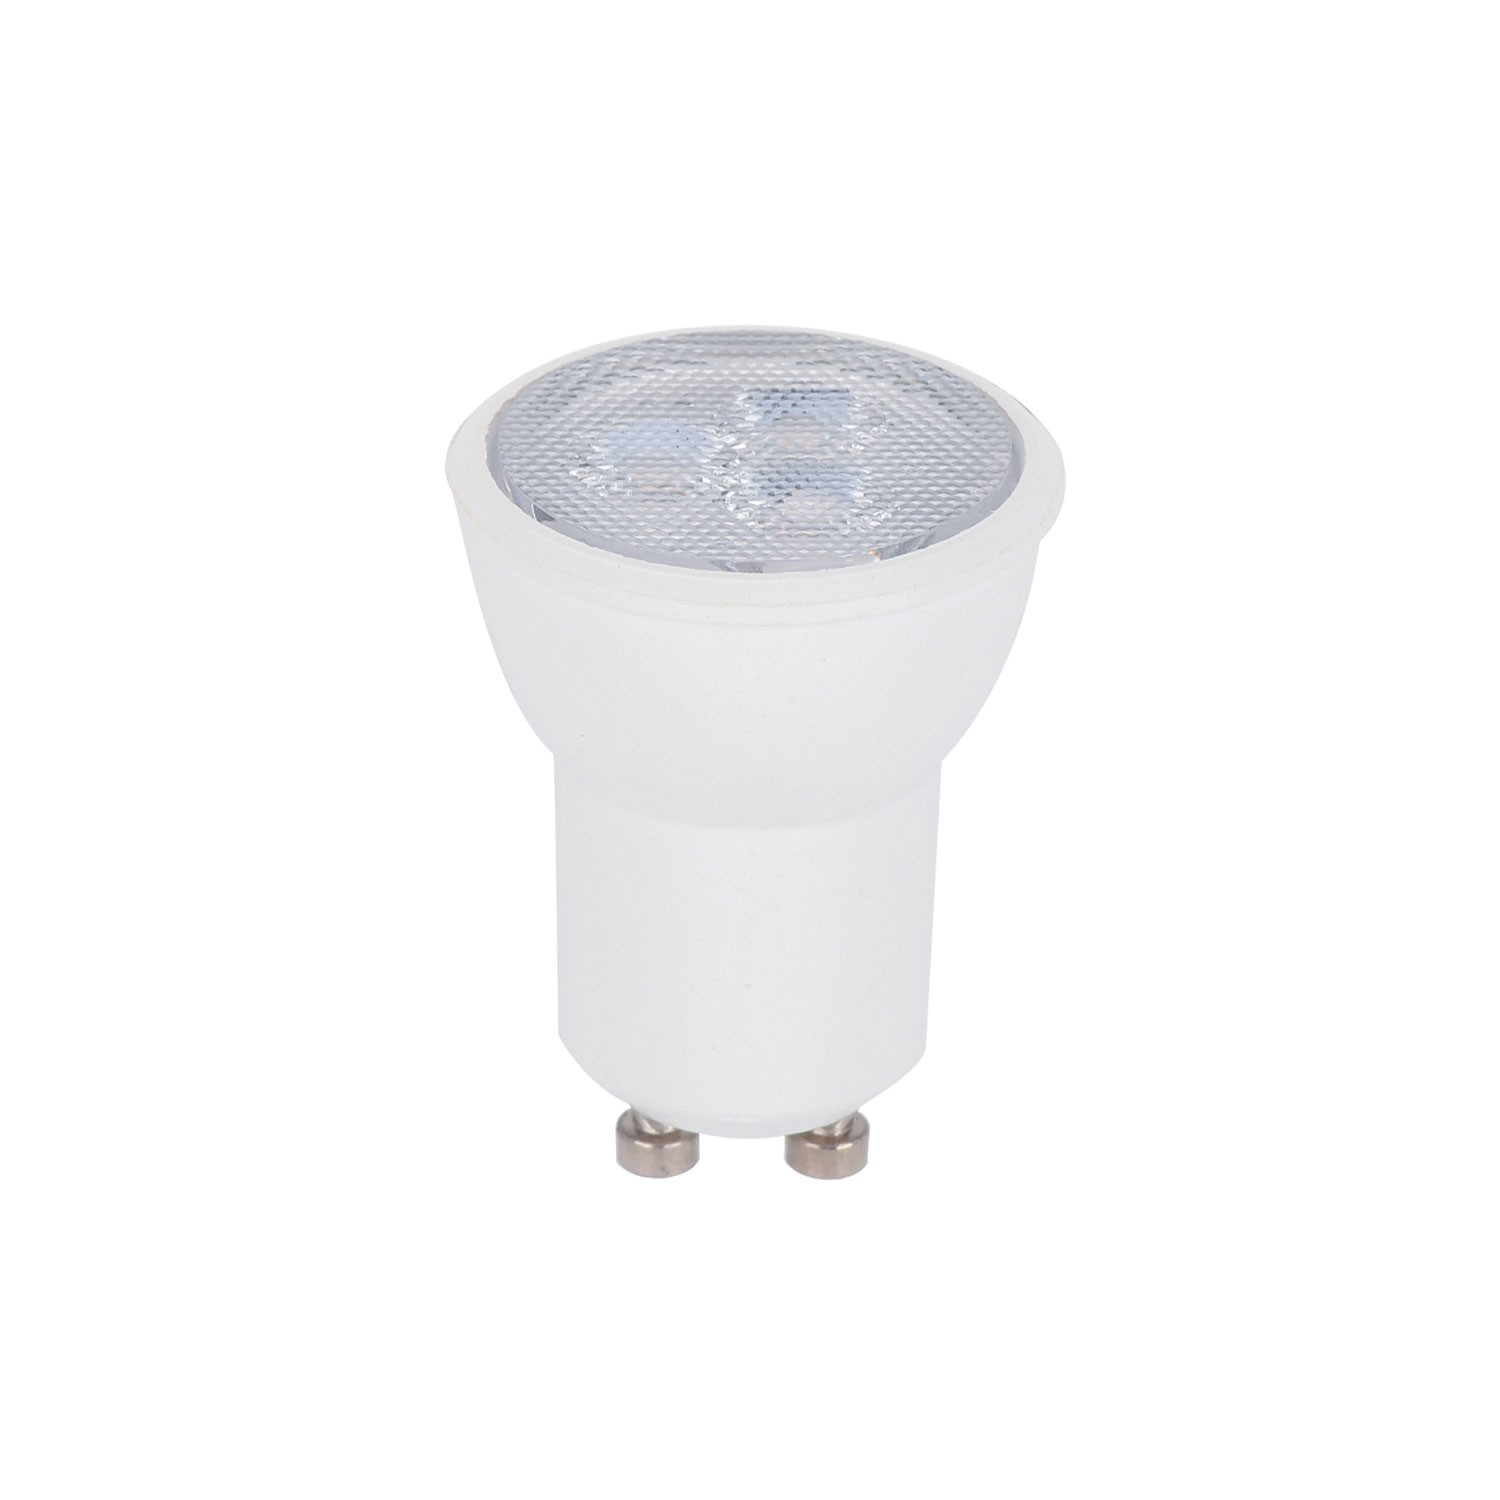 GU1d-one Pastel Lámpara articulada sin base con mini foco LED